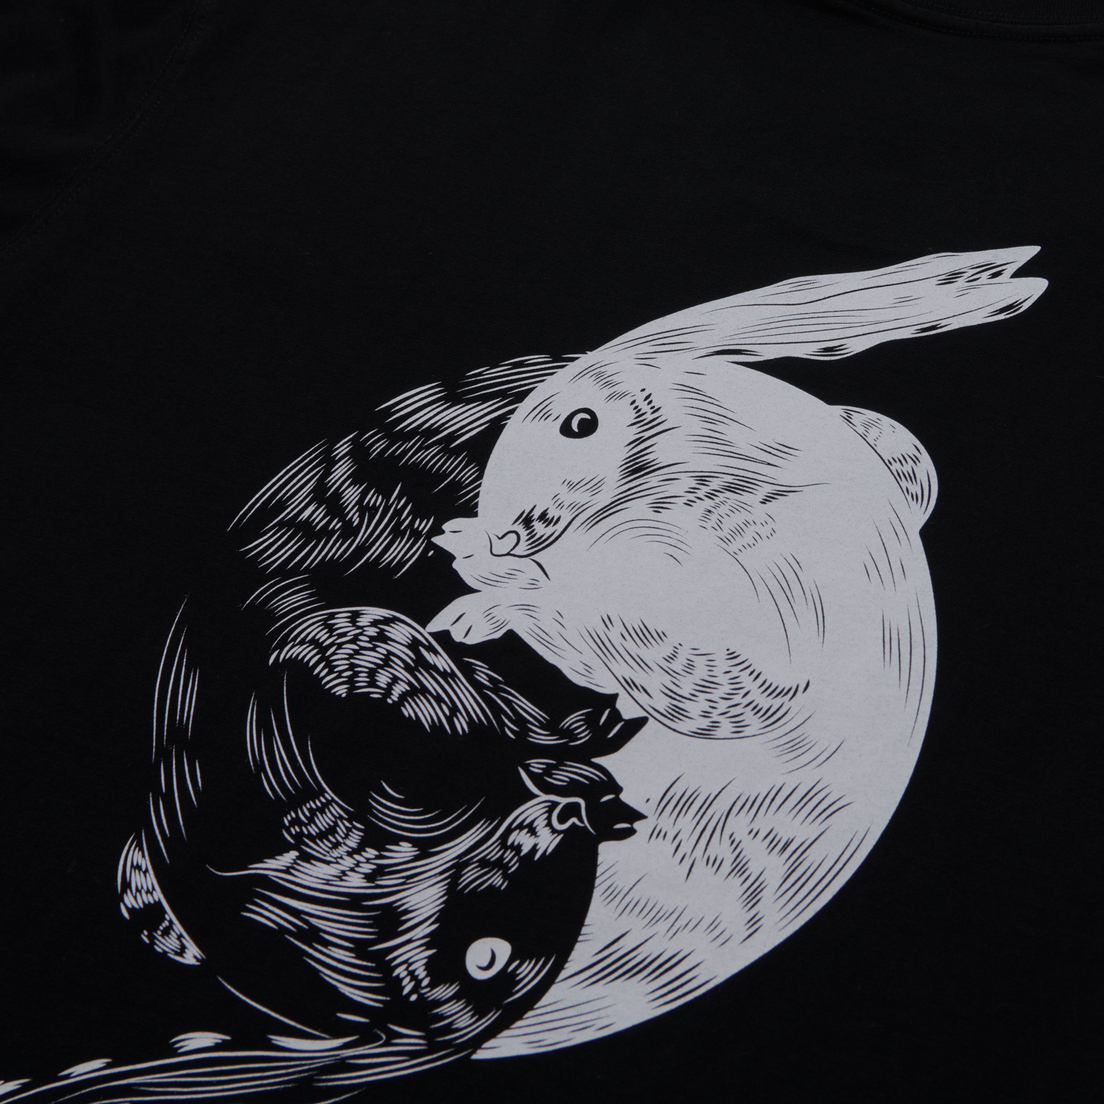 maharishi Мужская футболка Yin Yang Rabbit